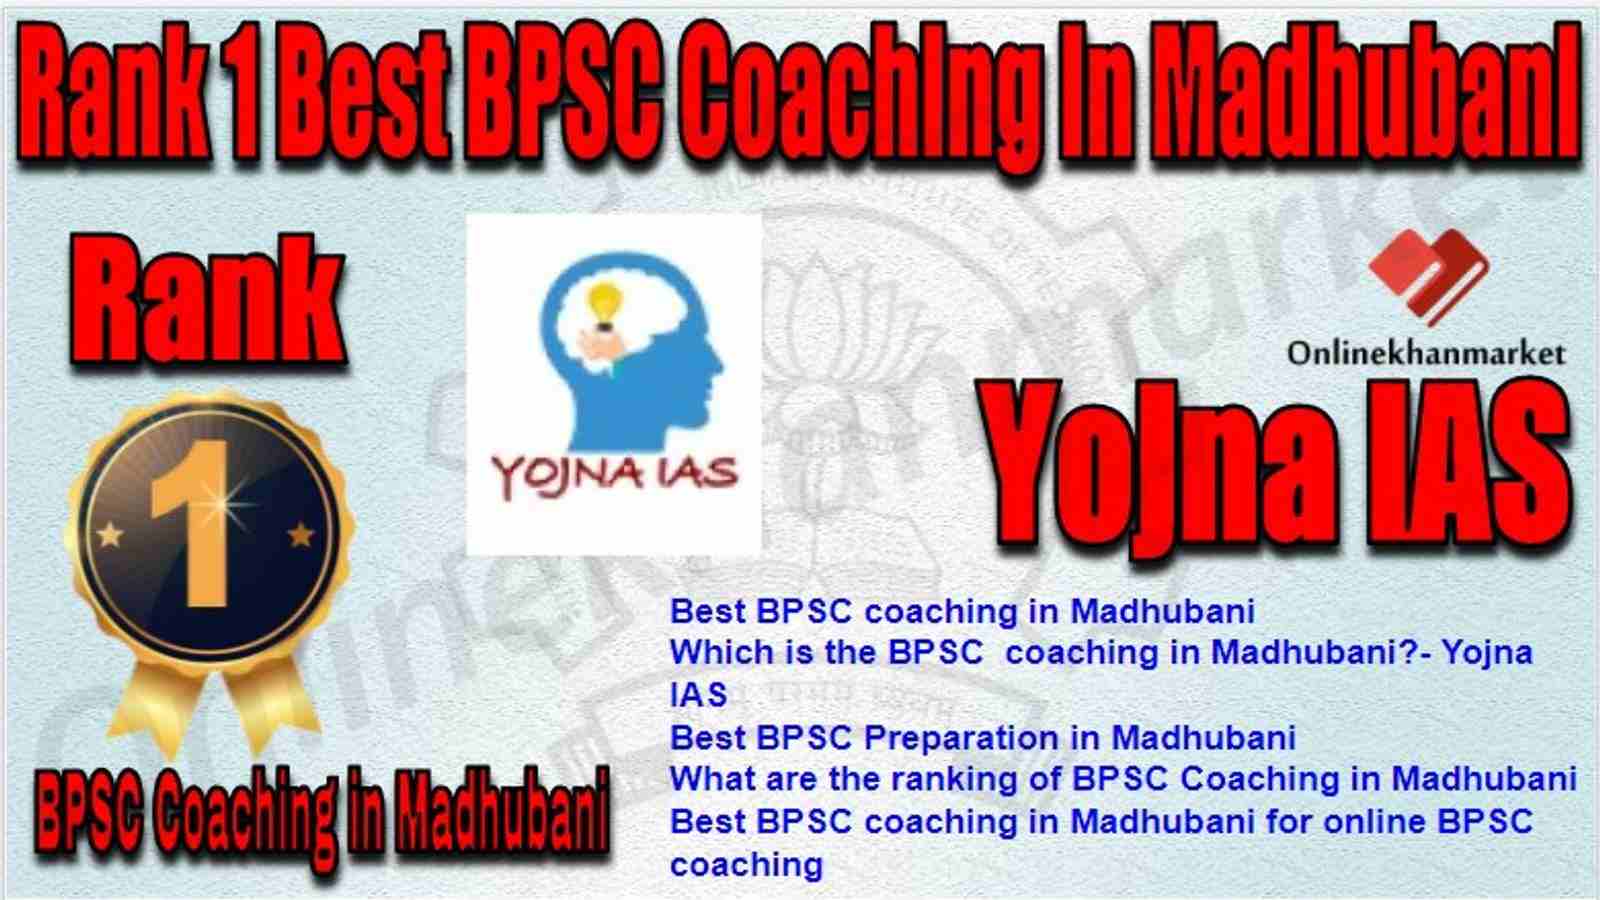 Rank 1 Best BPSC Coaching in madhubani